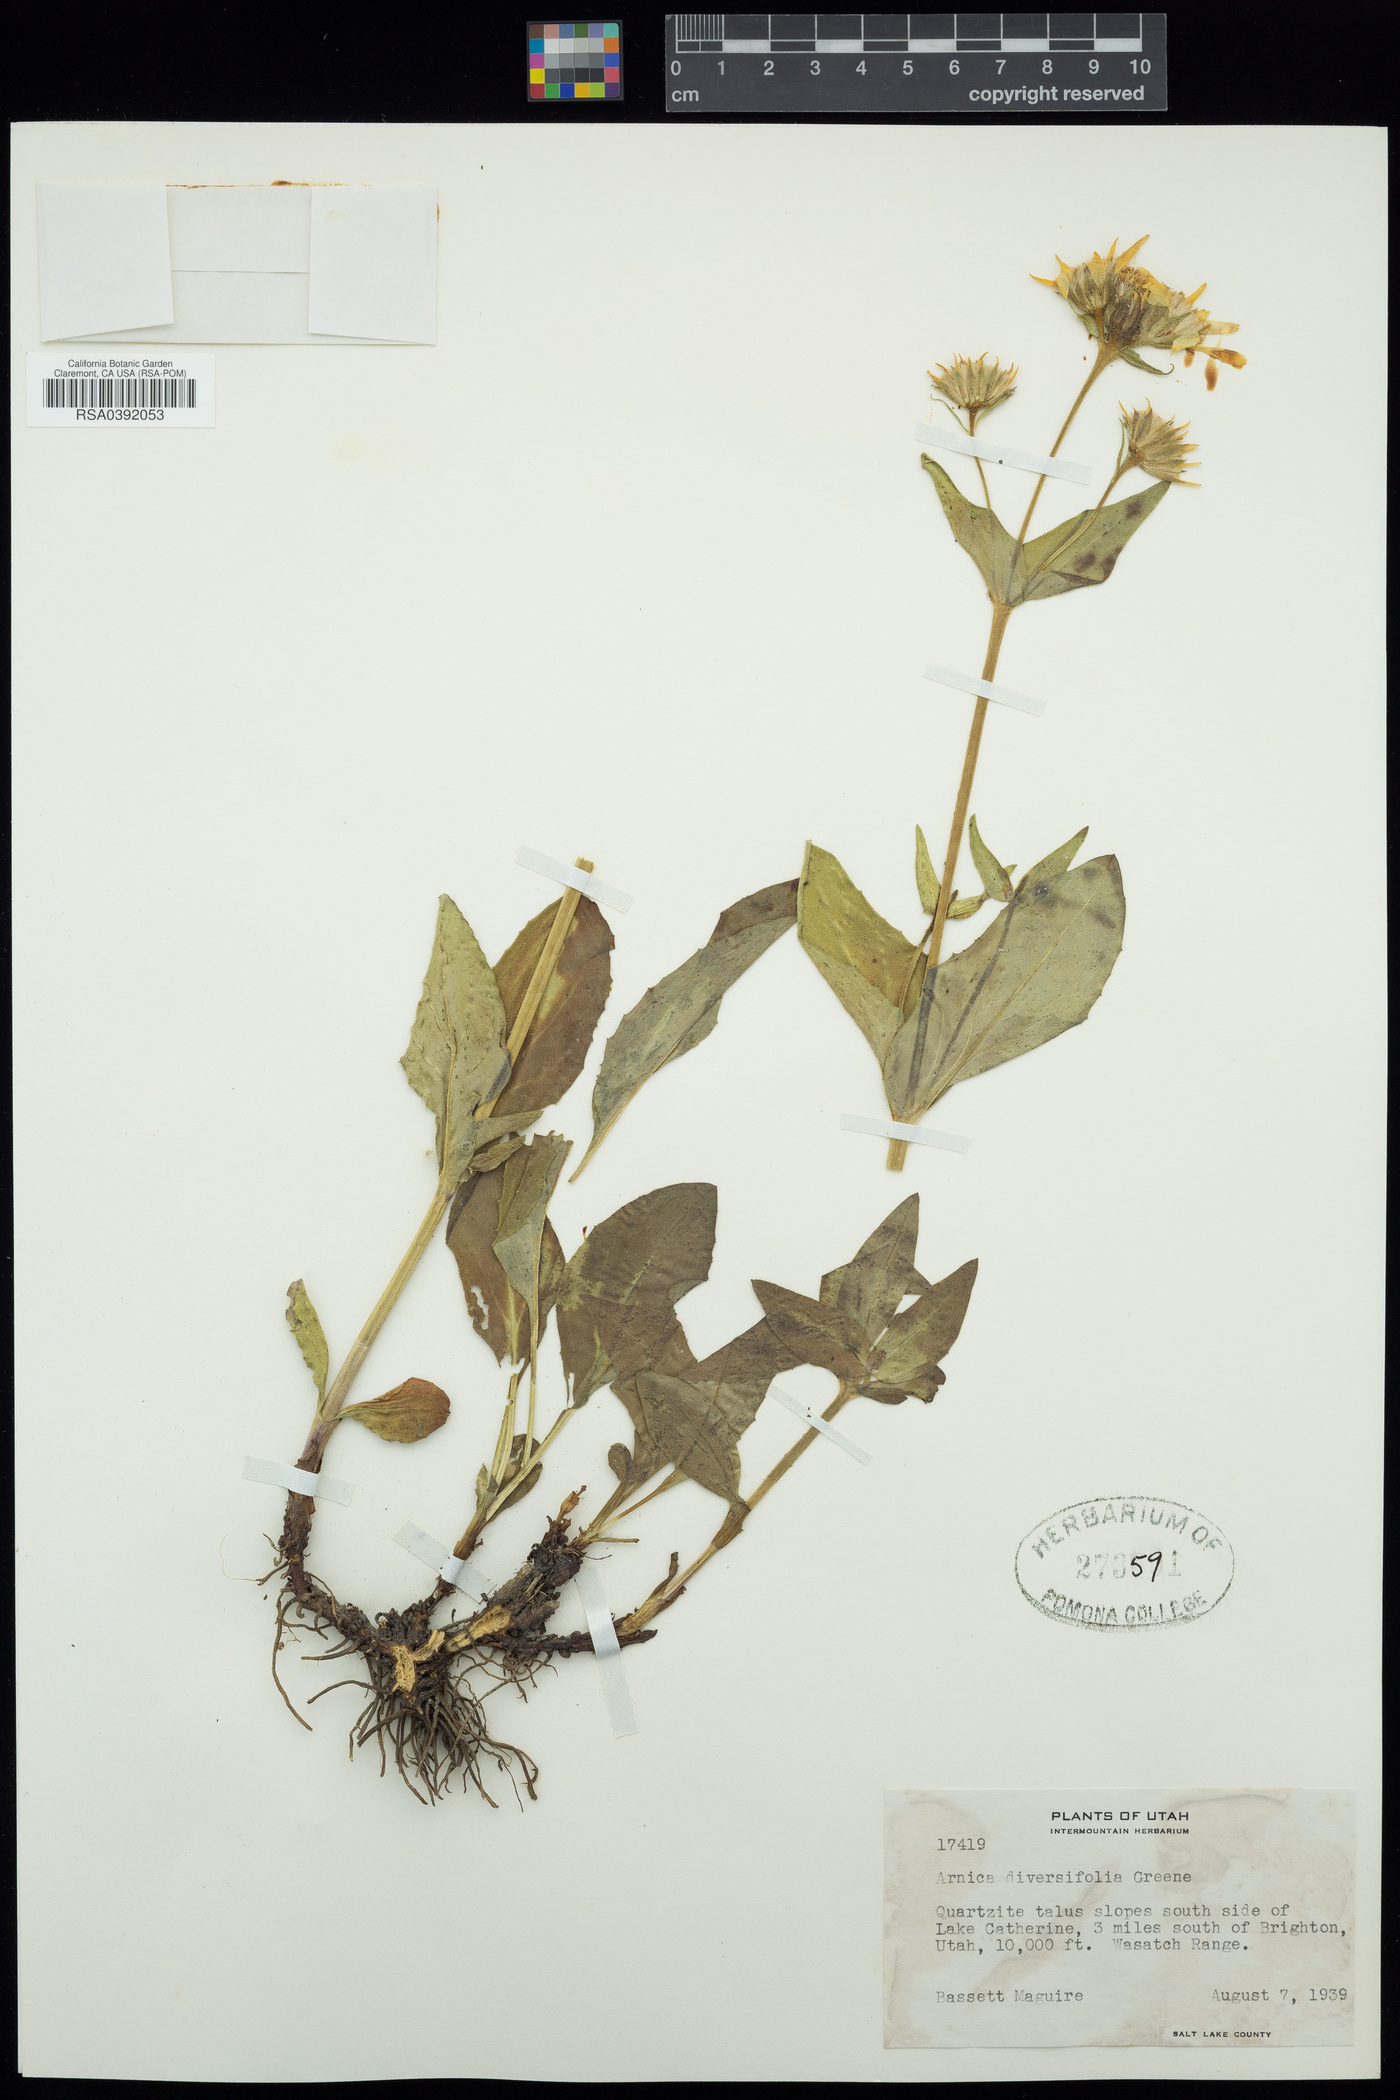 Arnica diversifolia image